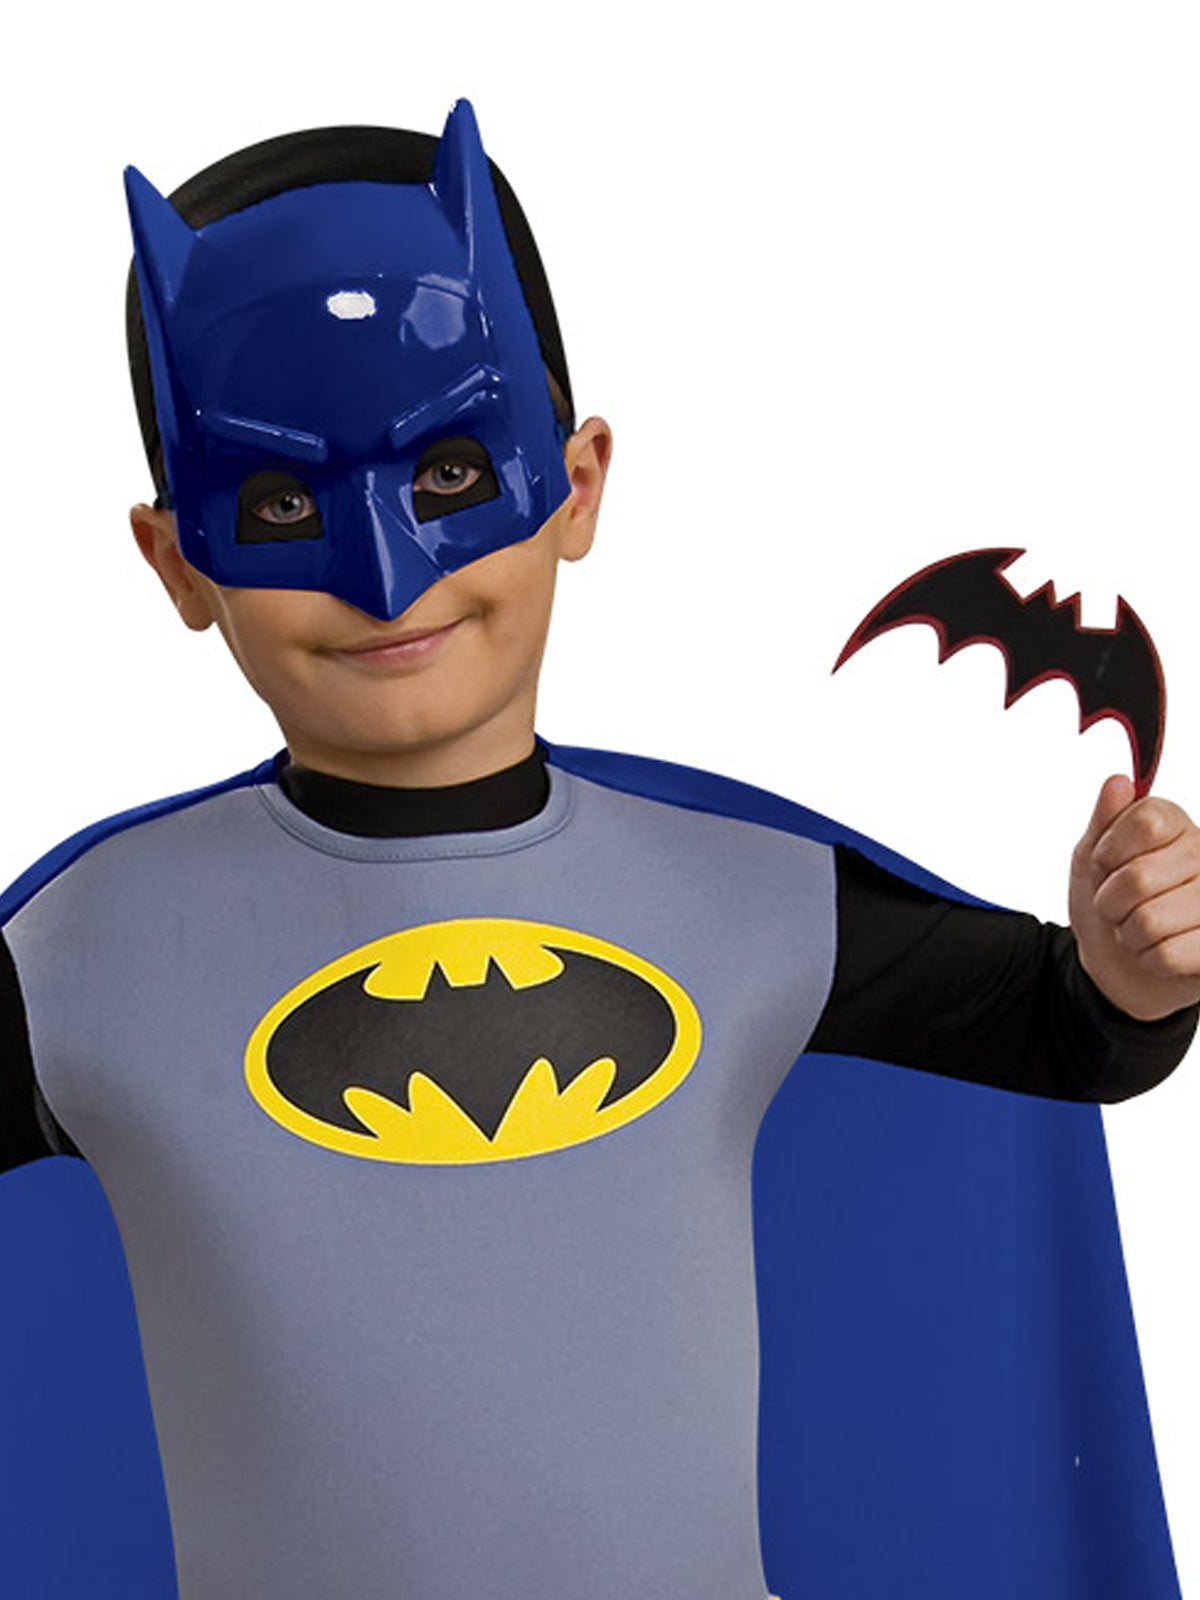 Batman Accessory Set Child Costume Genuine Licensed with Cape, Mask, Belt